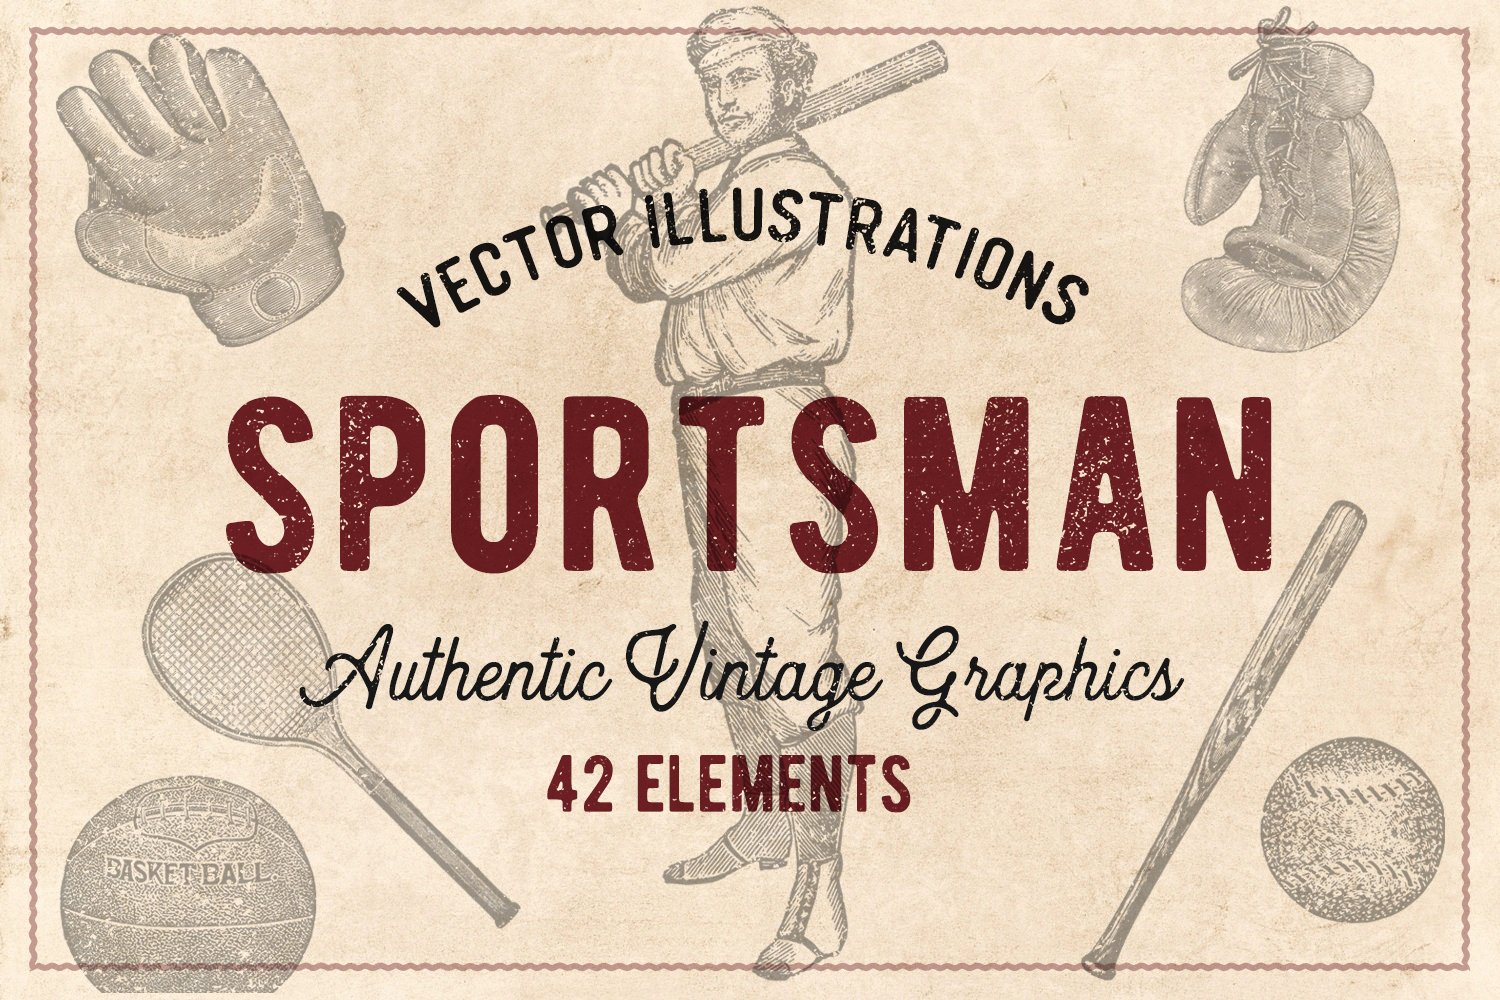 42 Vintage Sports Illustrations cover image.